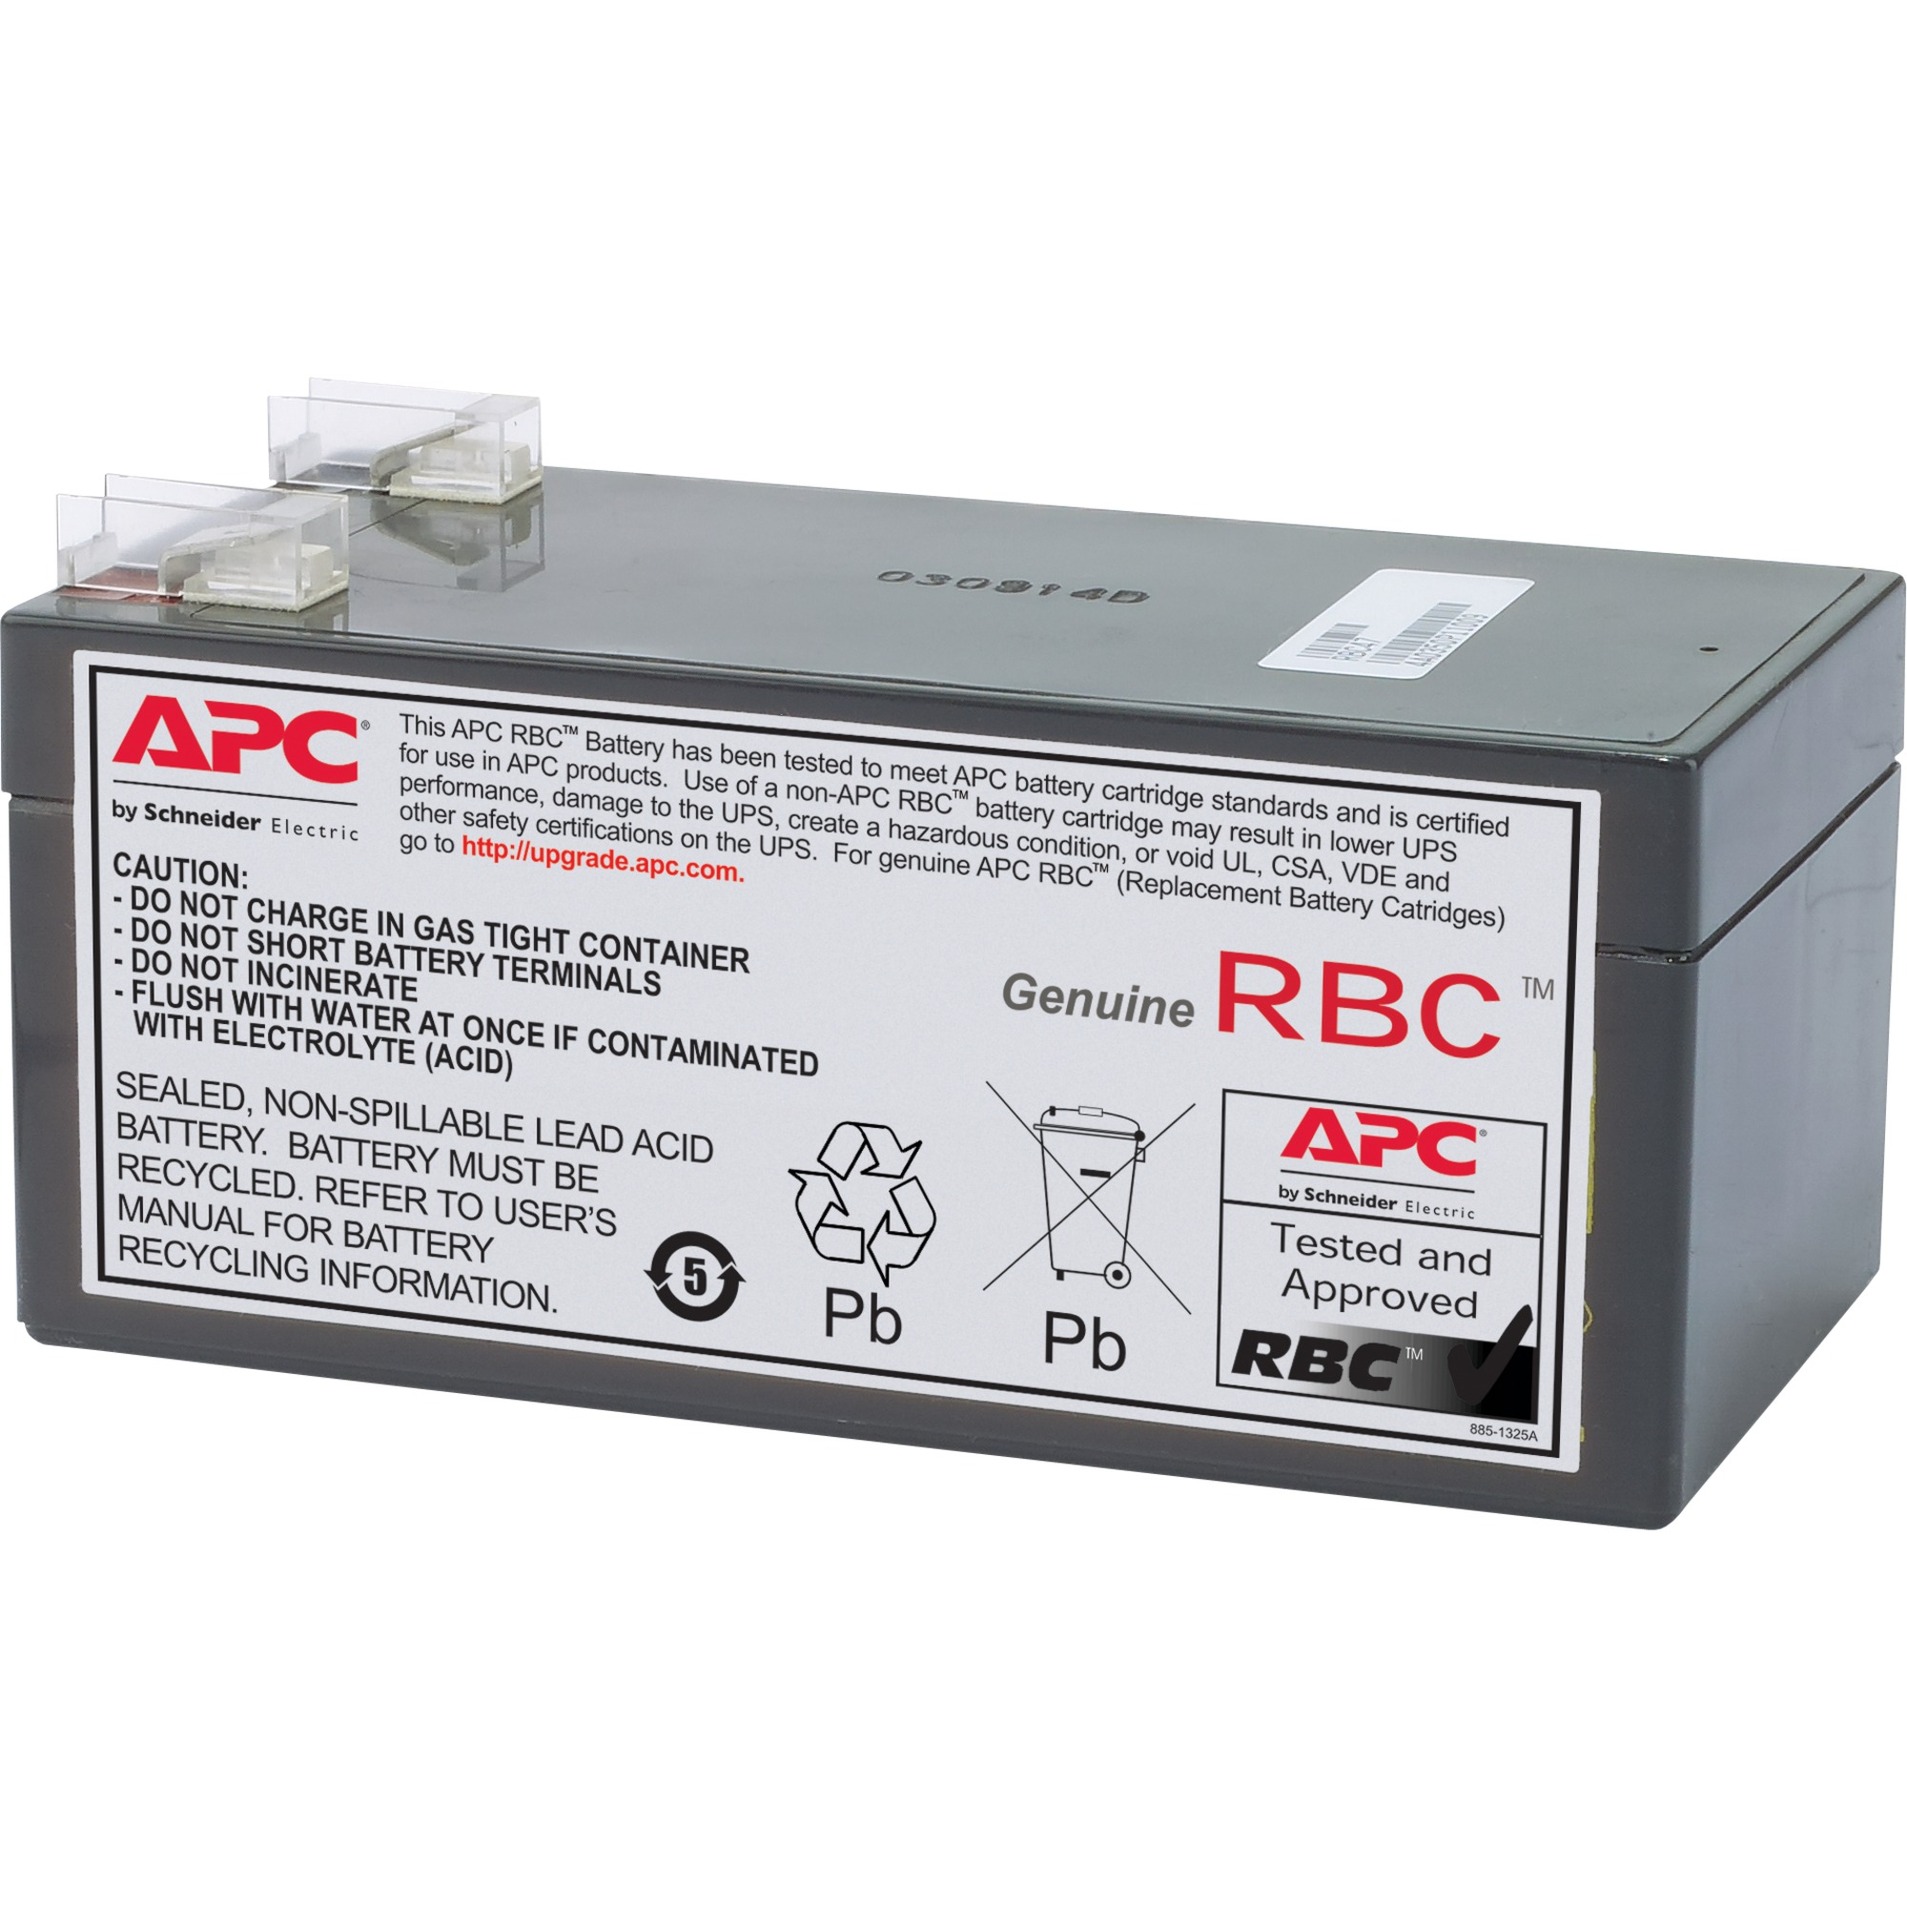 Replacement Battery Cartridge 47, Batterie von APC